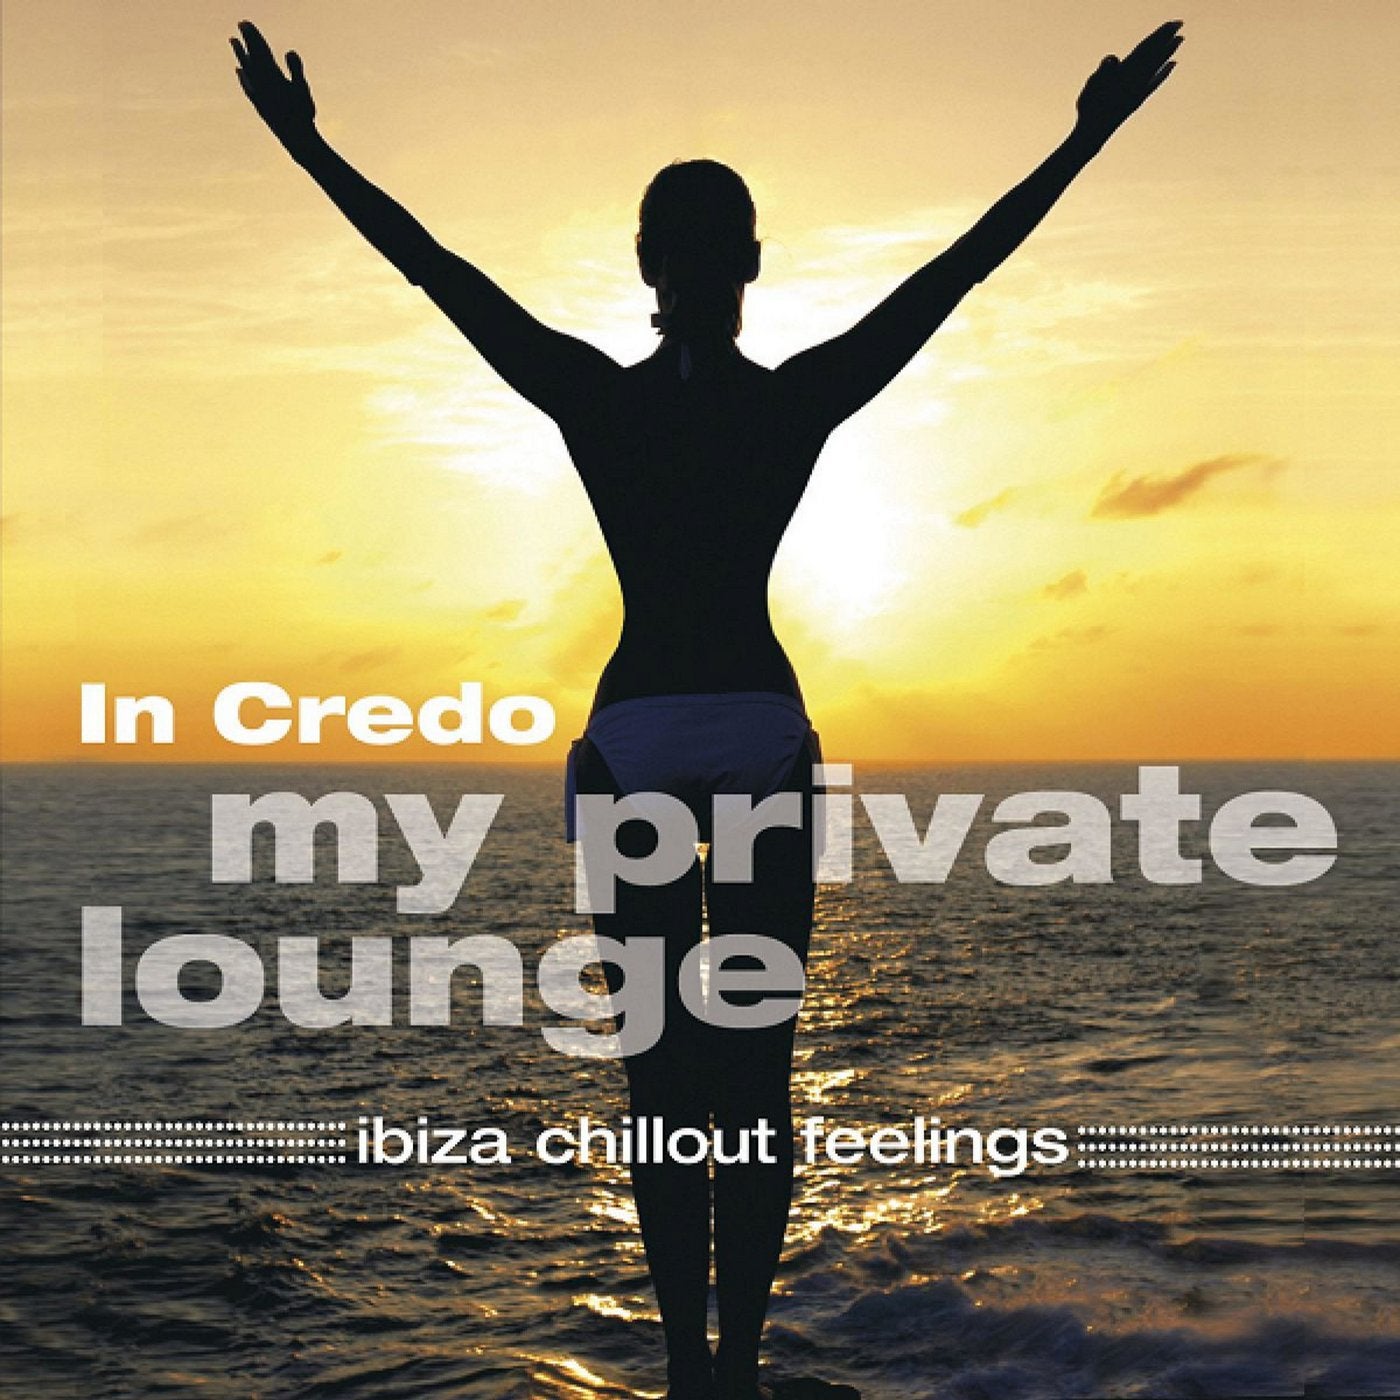 Chilling feeling. In Credo - Siesta del Sol. Кредо Ибица. Ibiza 2008 альбом. Море острых ощущений кредо.